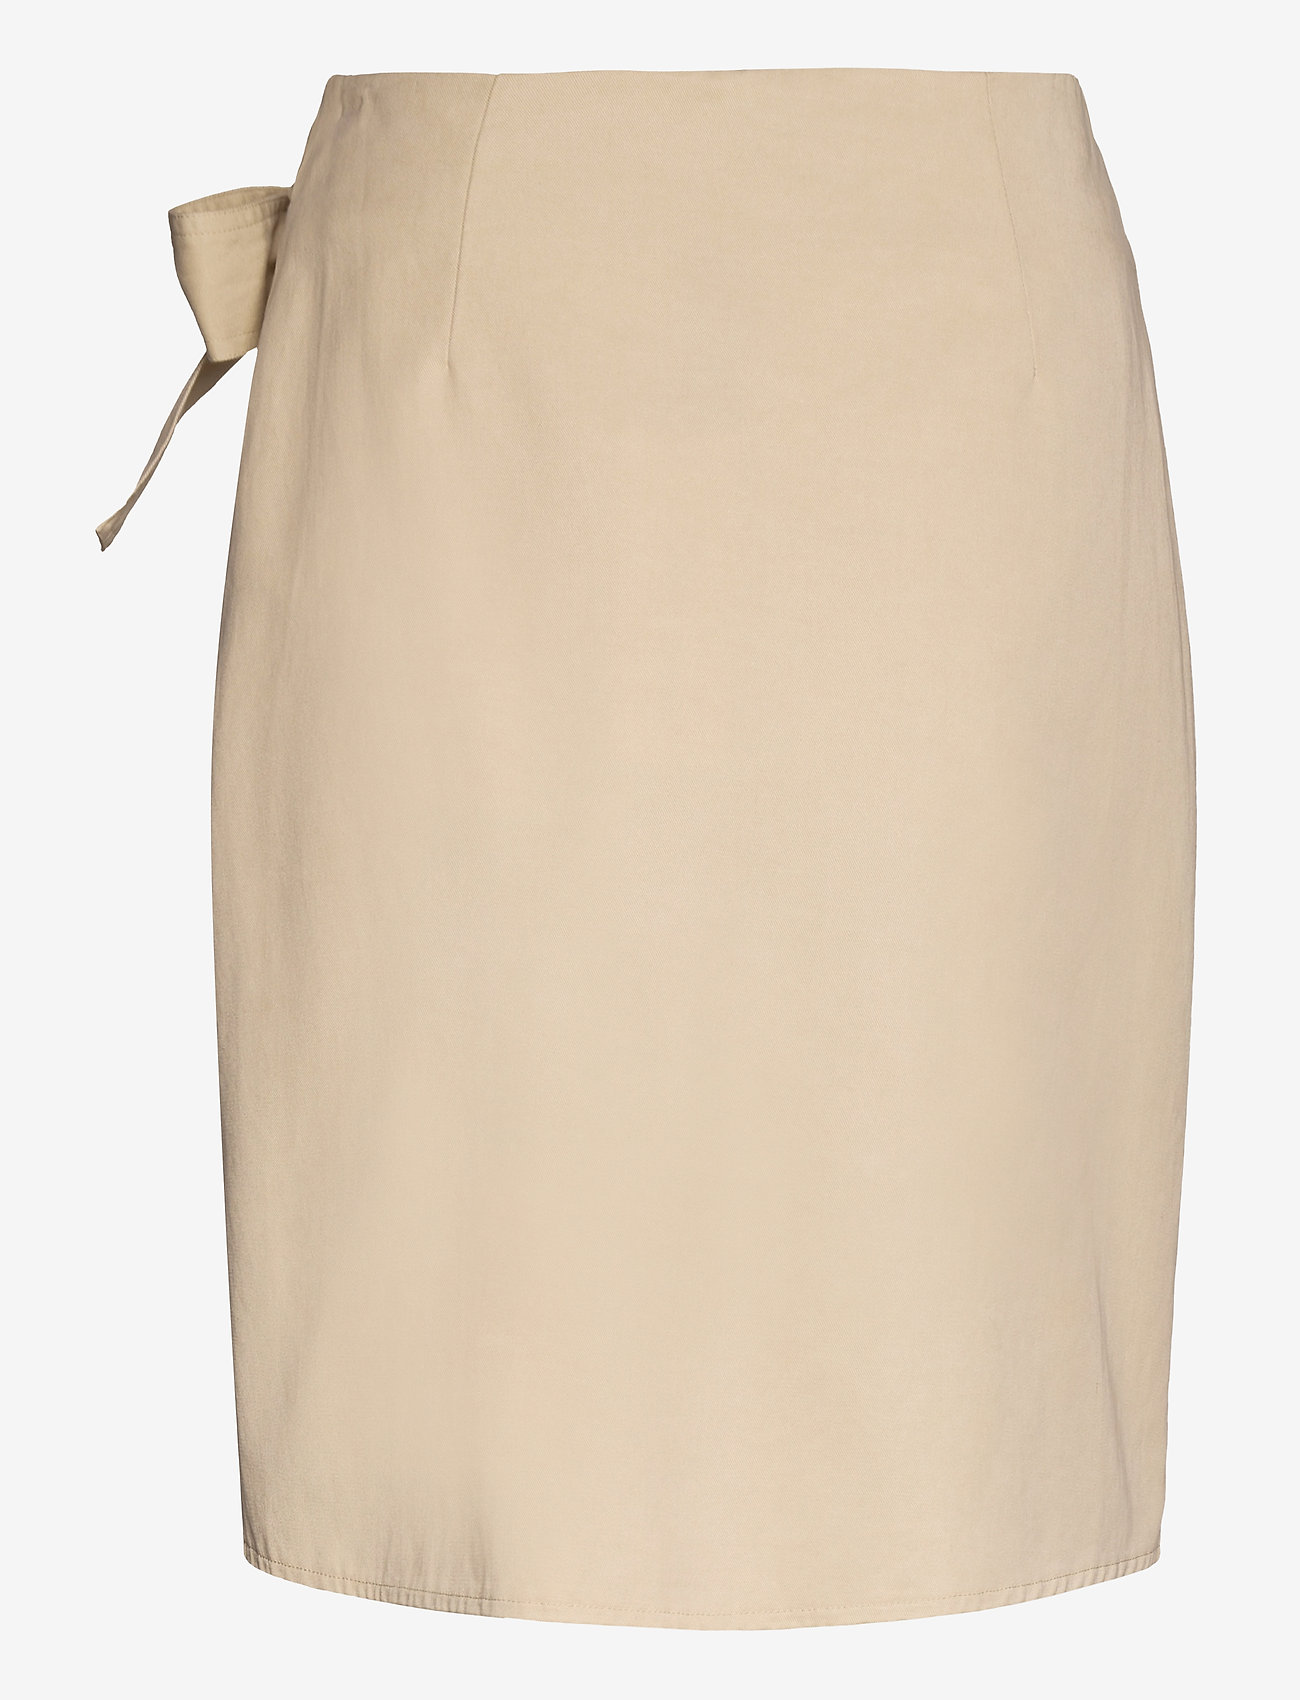 brown skirt for sale